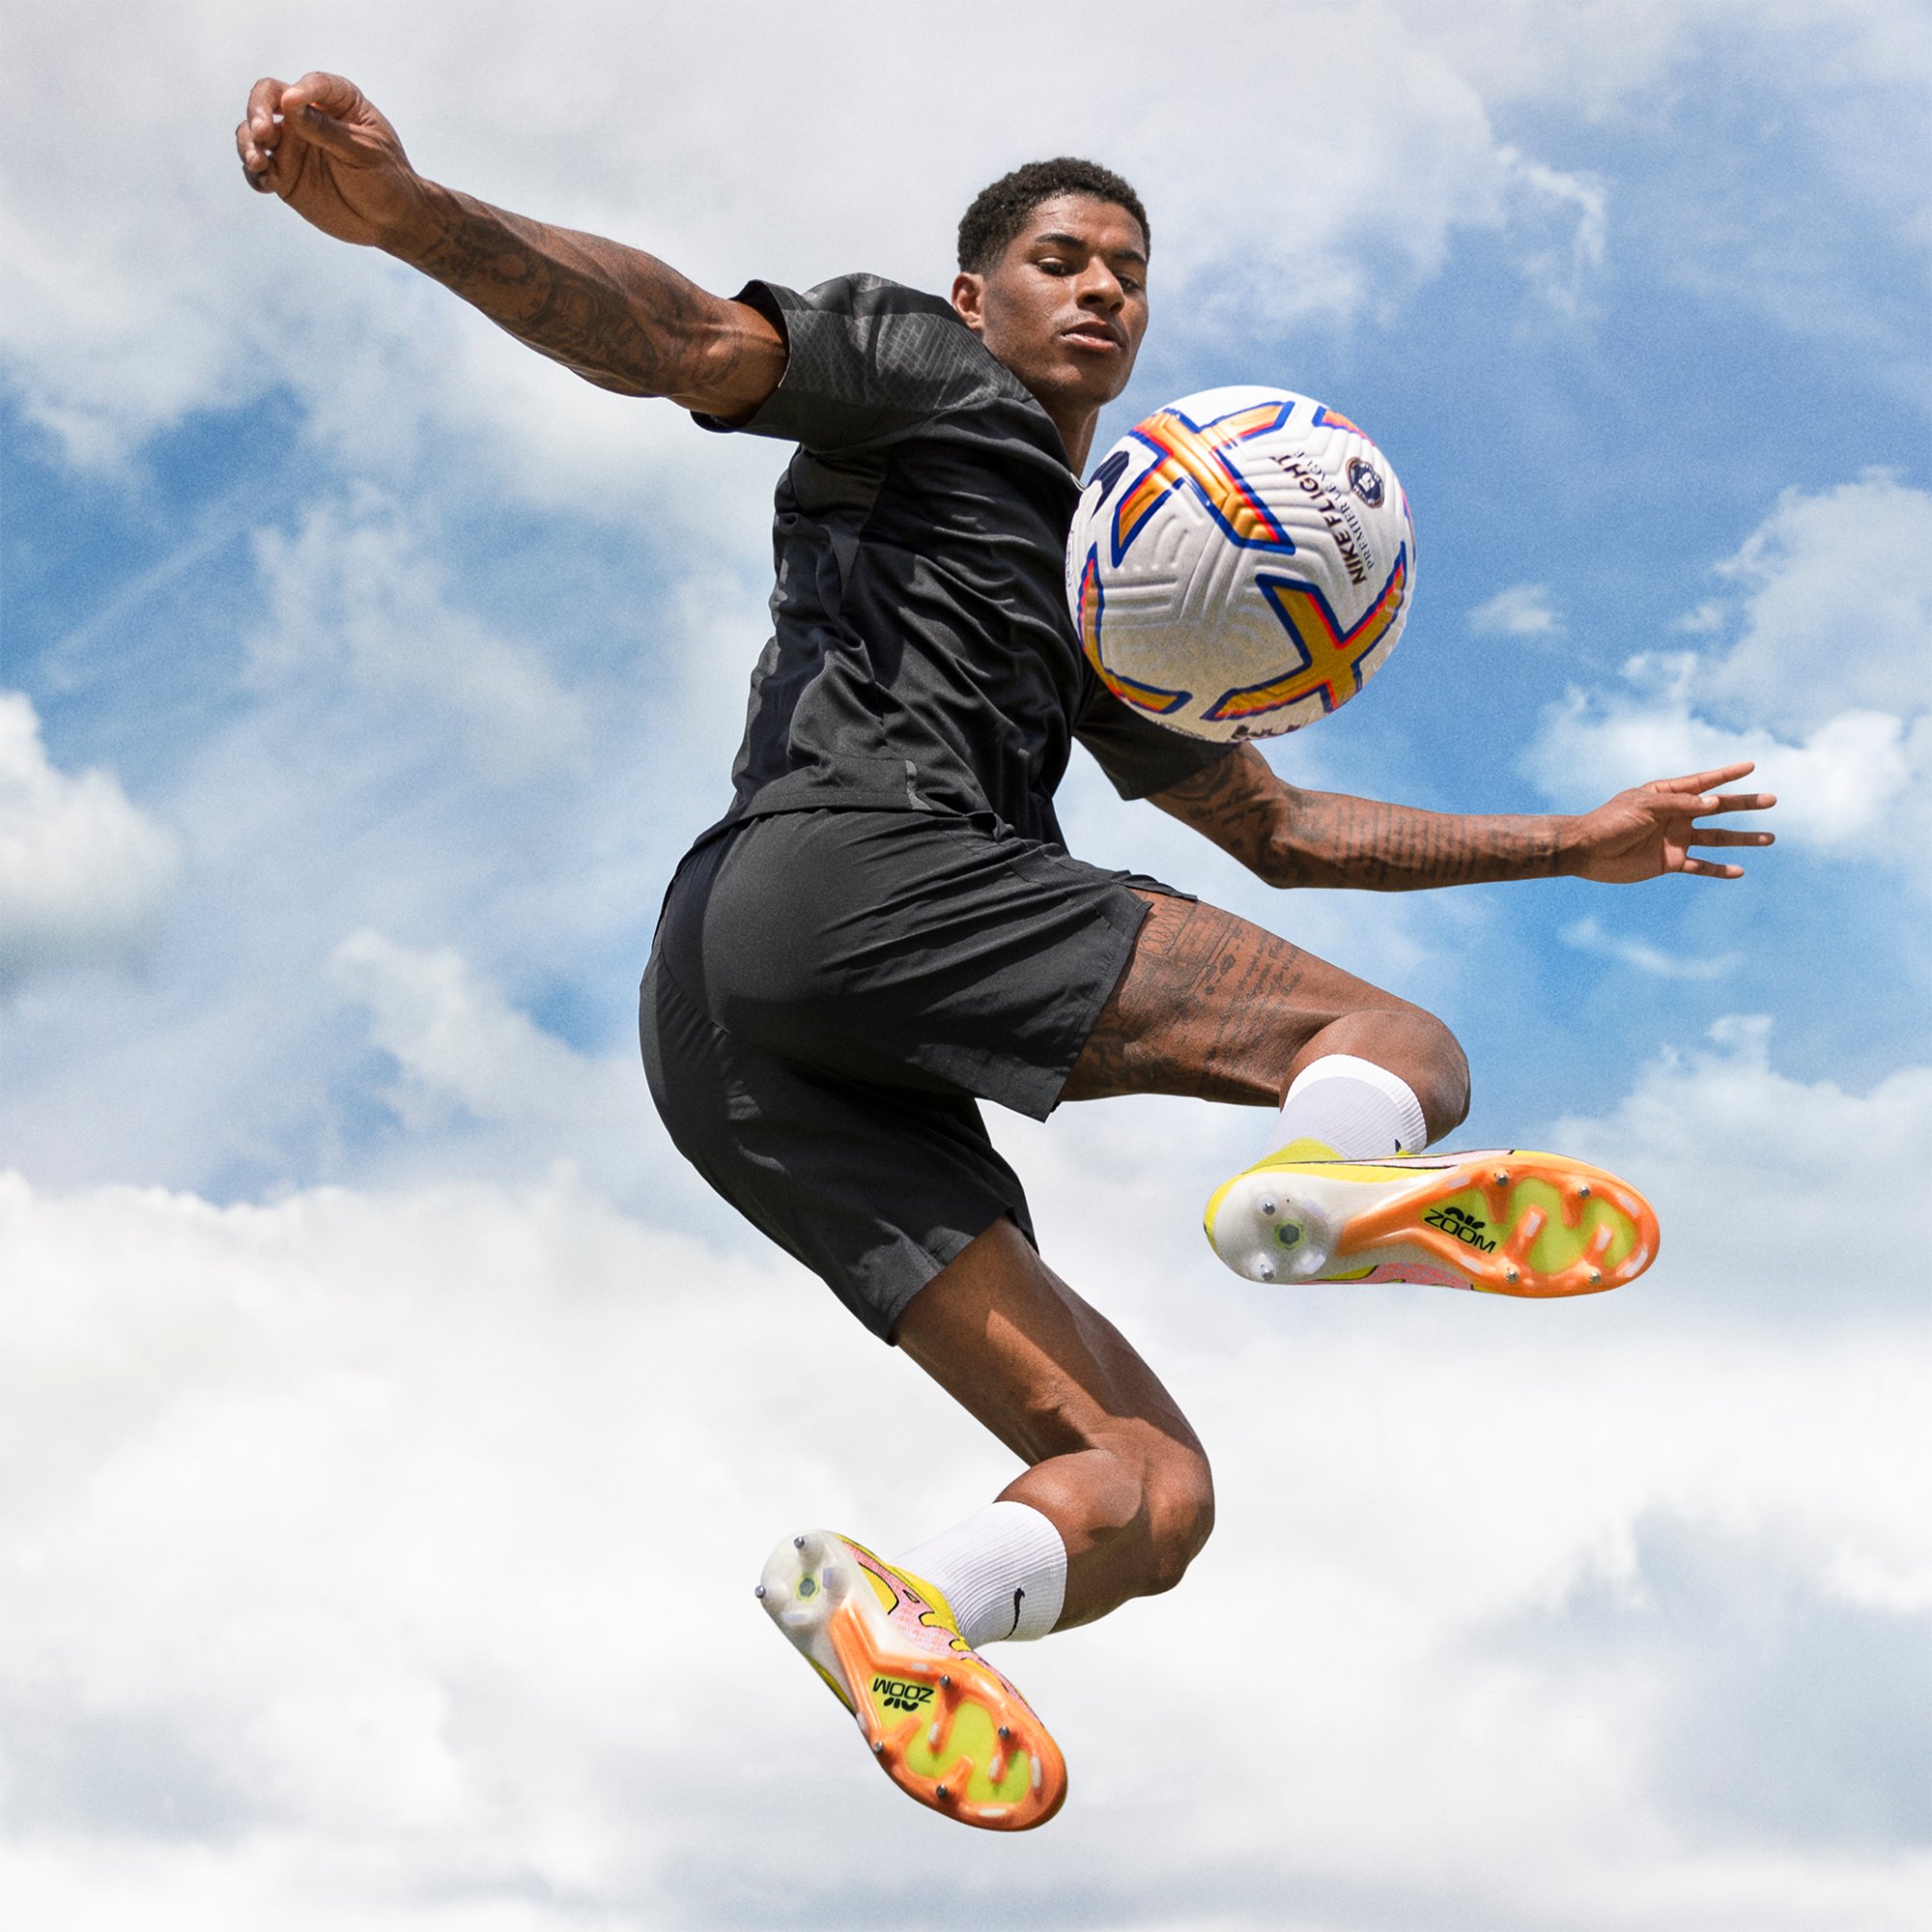 Nike Football on X: "Air + Mercurial + @MarcusRashford = Get the Air Zoom Mercurial in the Lucent colourway now: https://t.co/xoV74b4eDo https://t.co/q5sOpvvXXF" / X